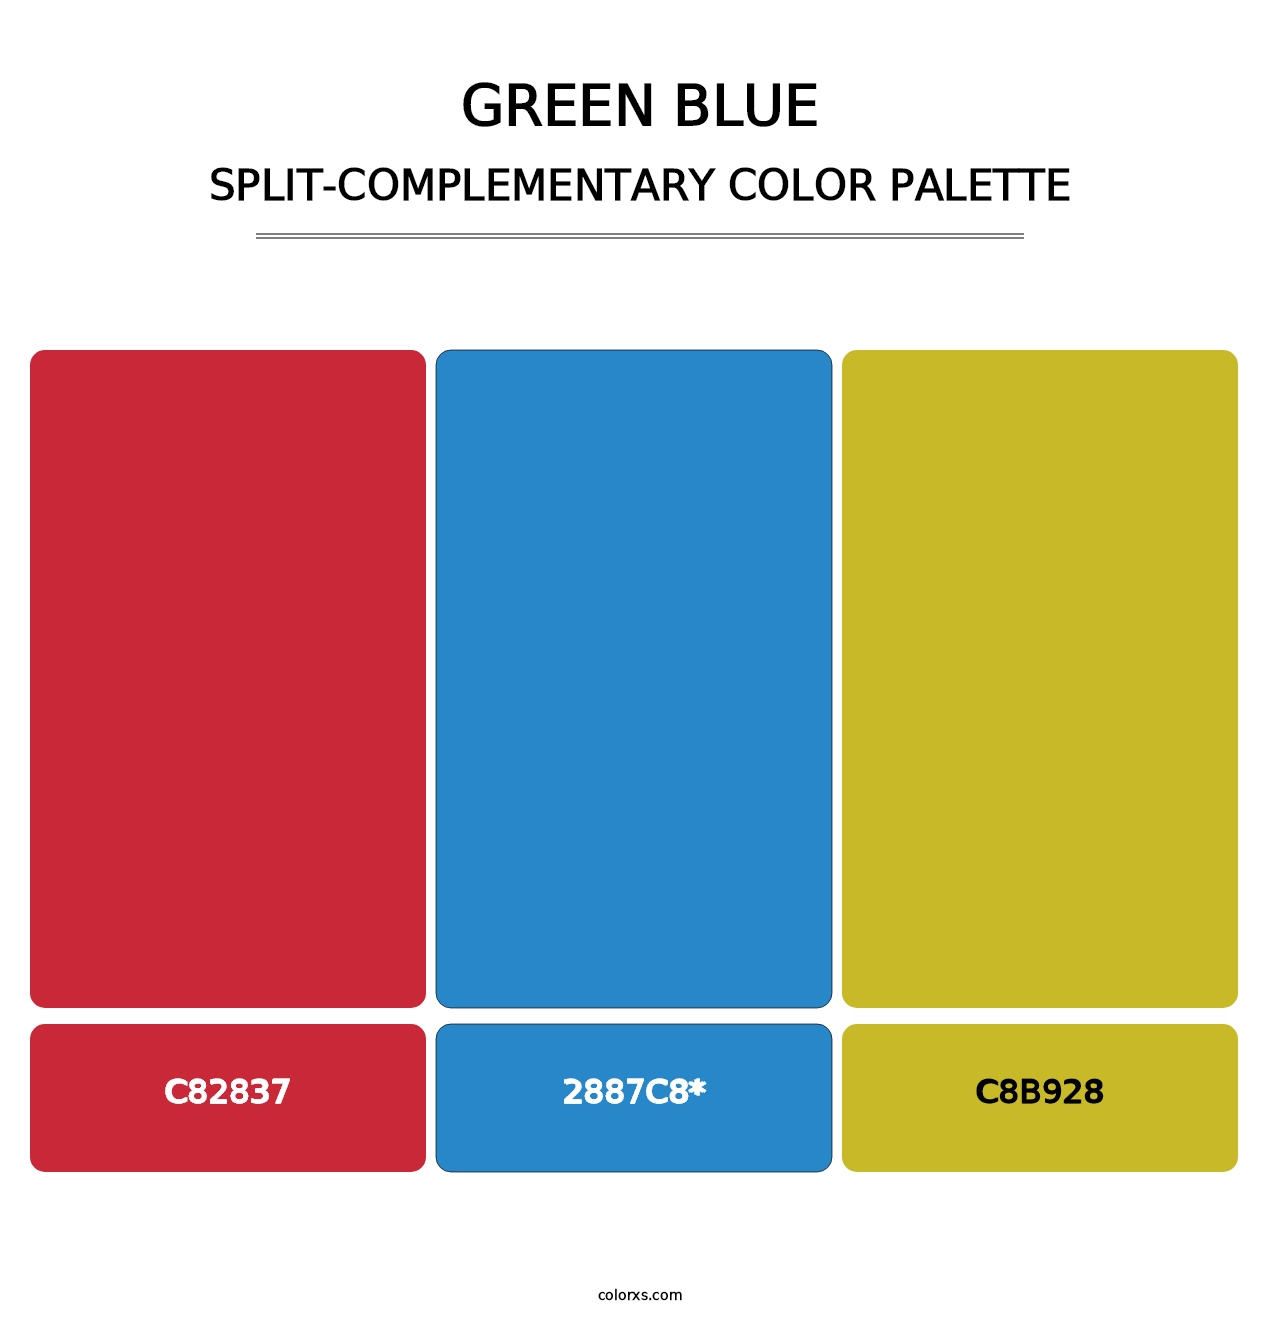 Green Blue - Split-Complementary Color Palette